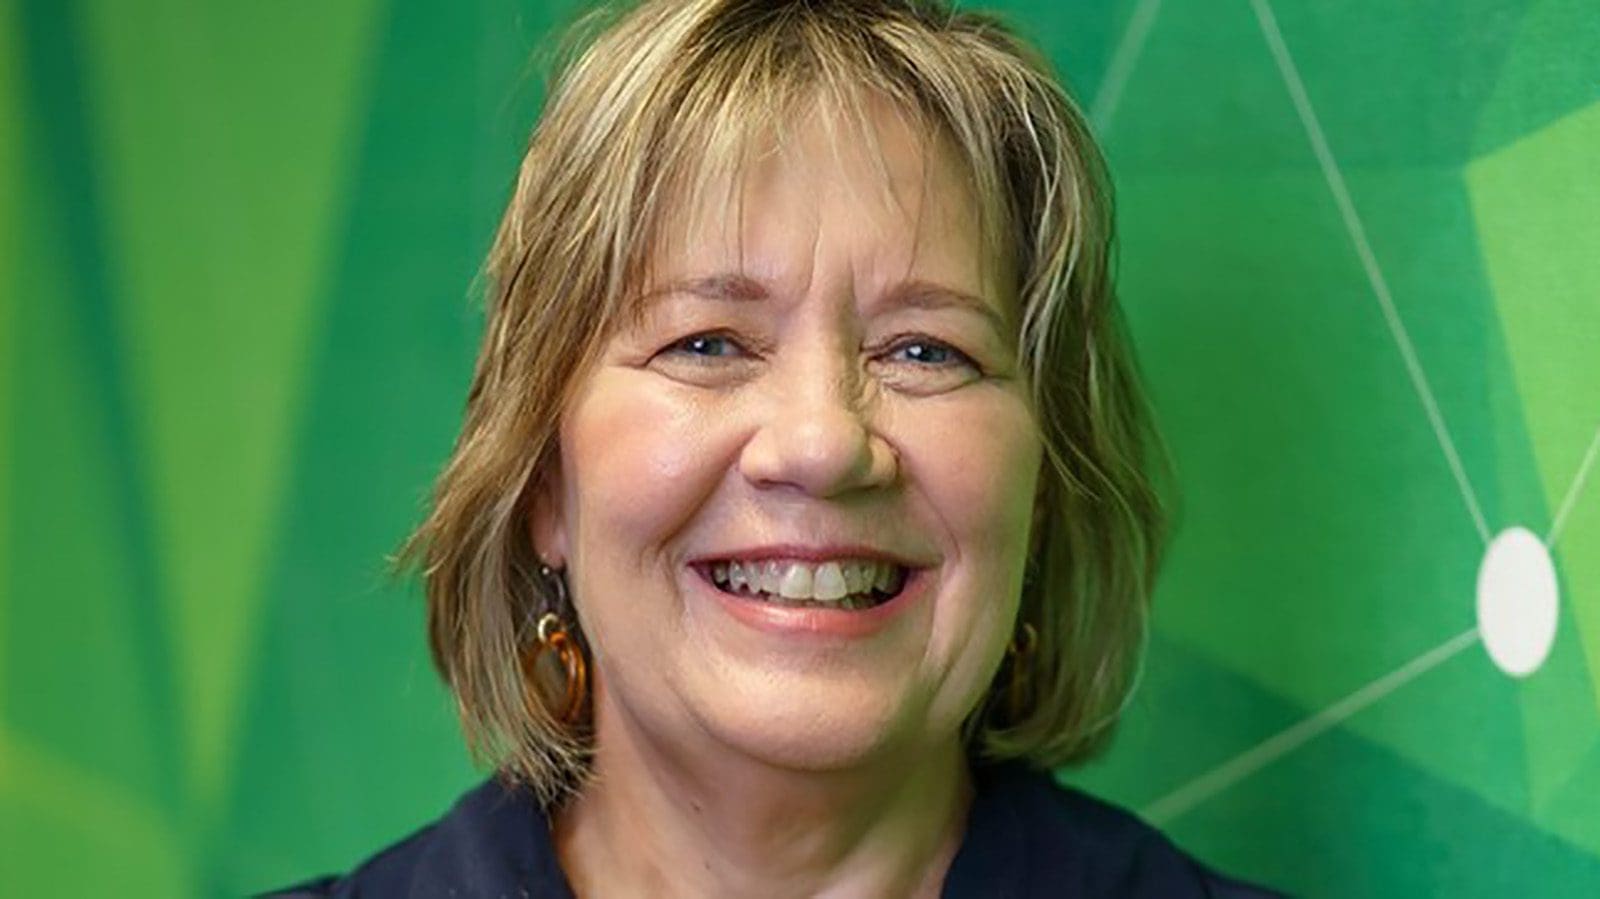 Heineken South Africa names Sharon Keith as new Marketing Director